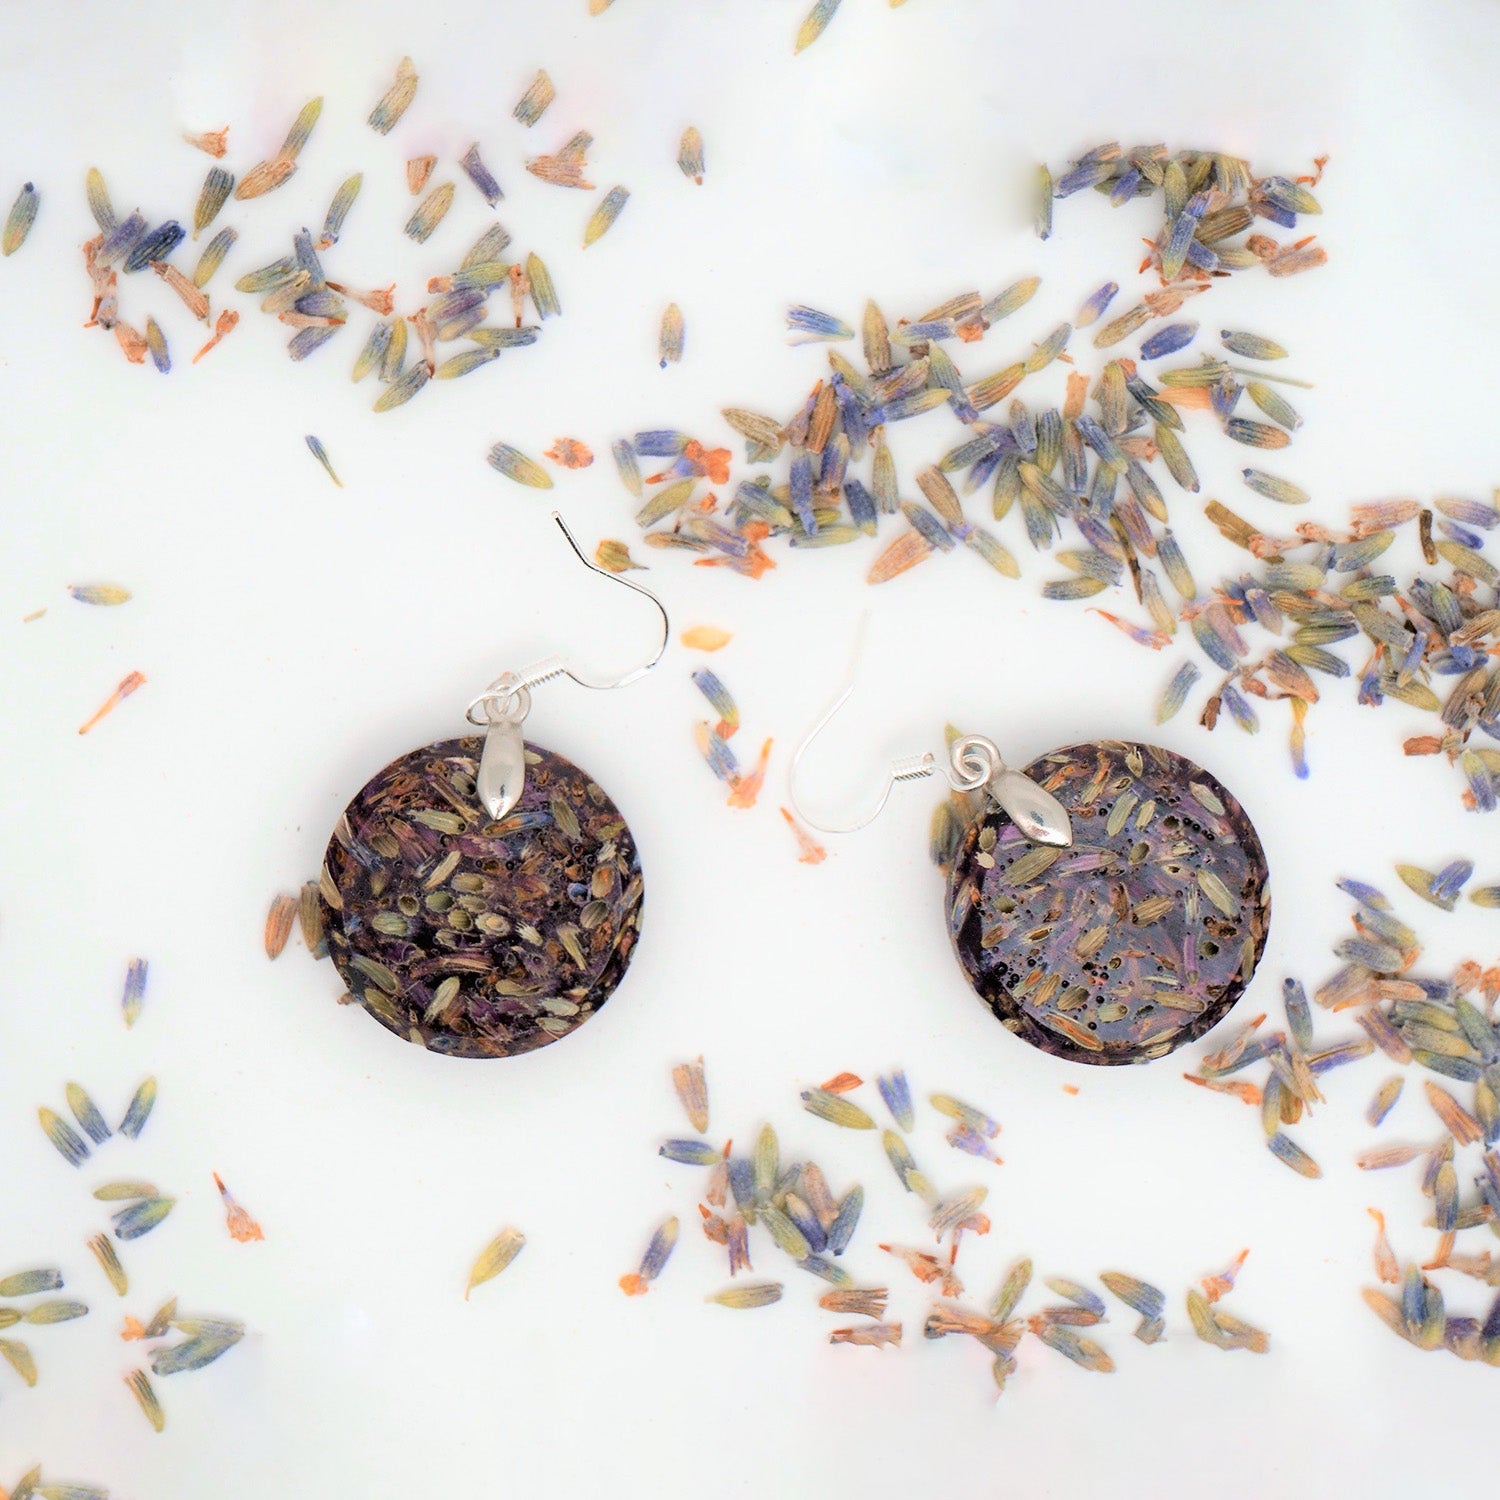 Round lavender earrings